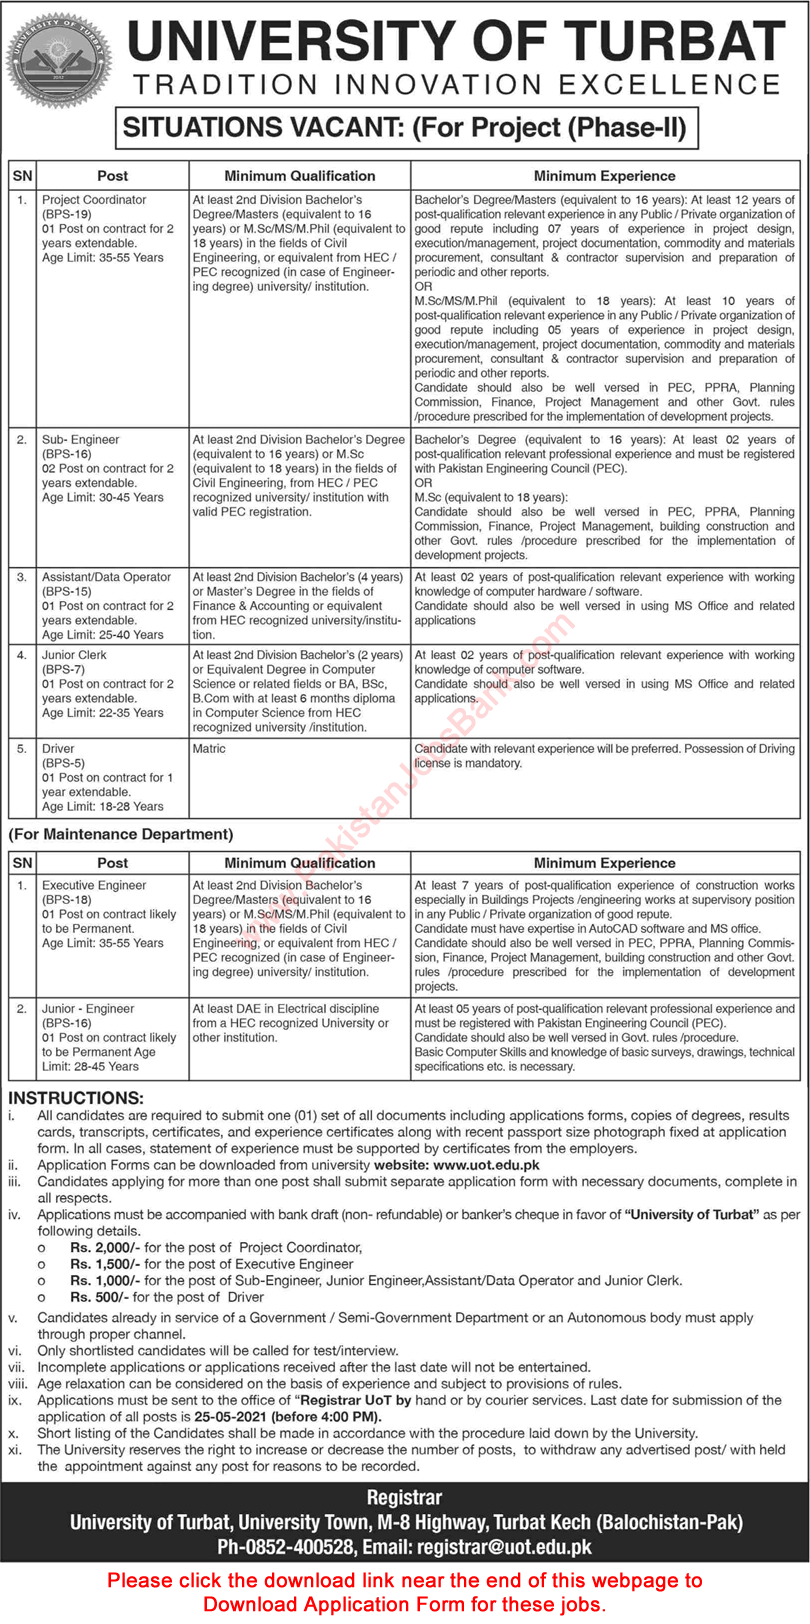 University of Turbat Jobs April 2021 Application Form Civil / Sub Engineer, Clerk & Others Latest